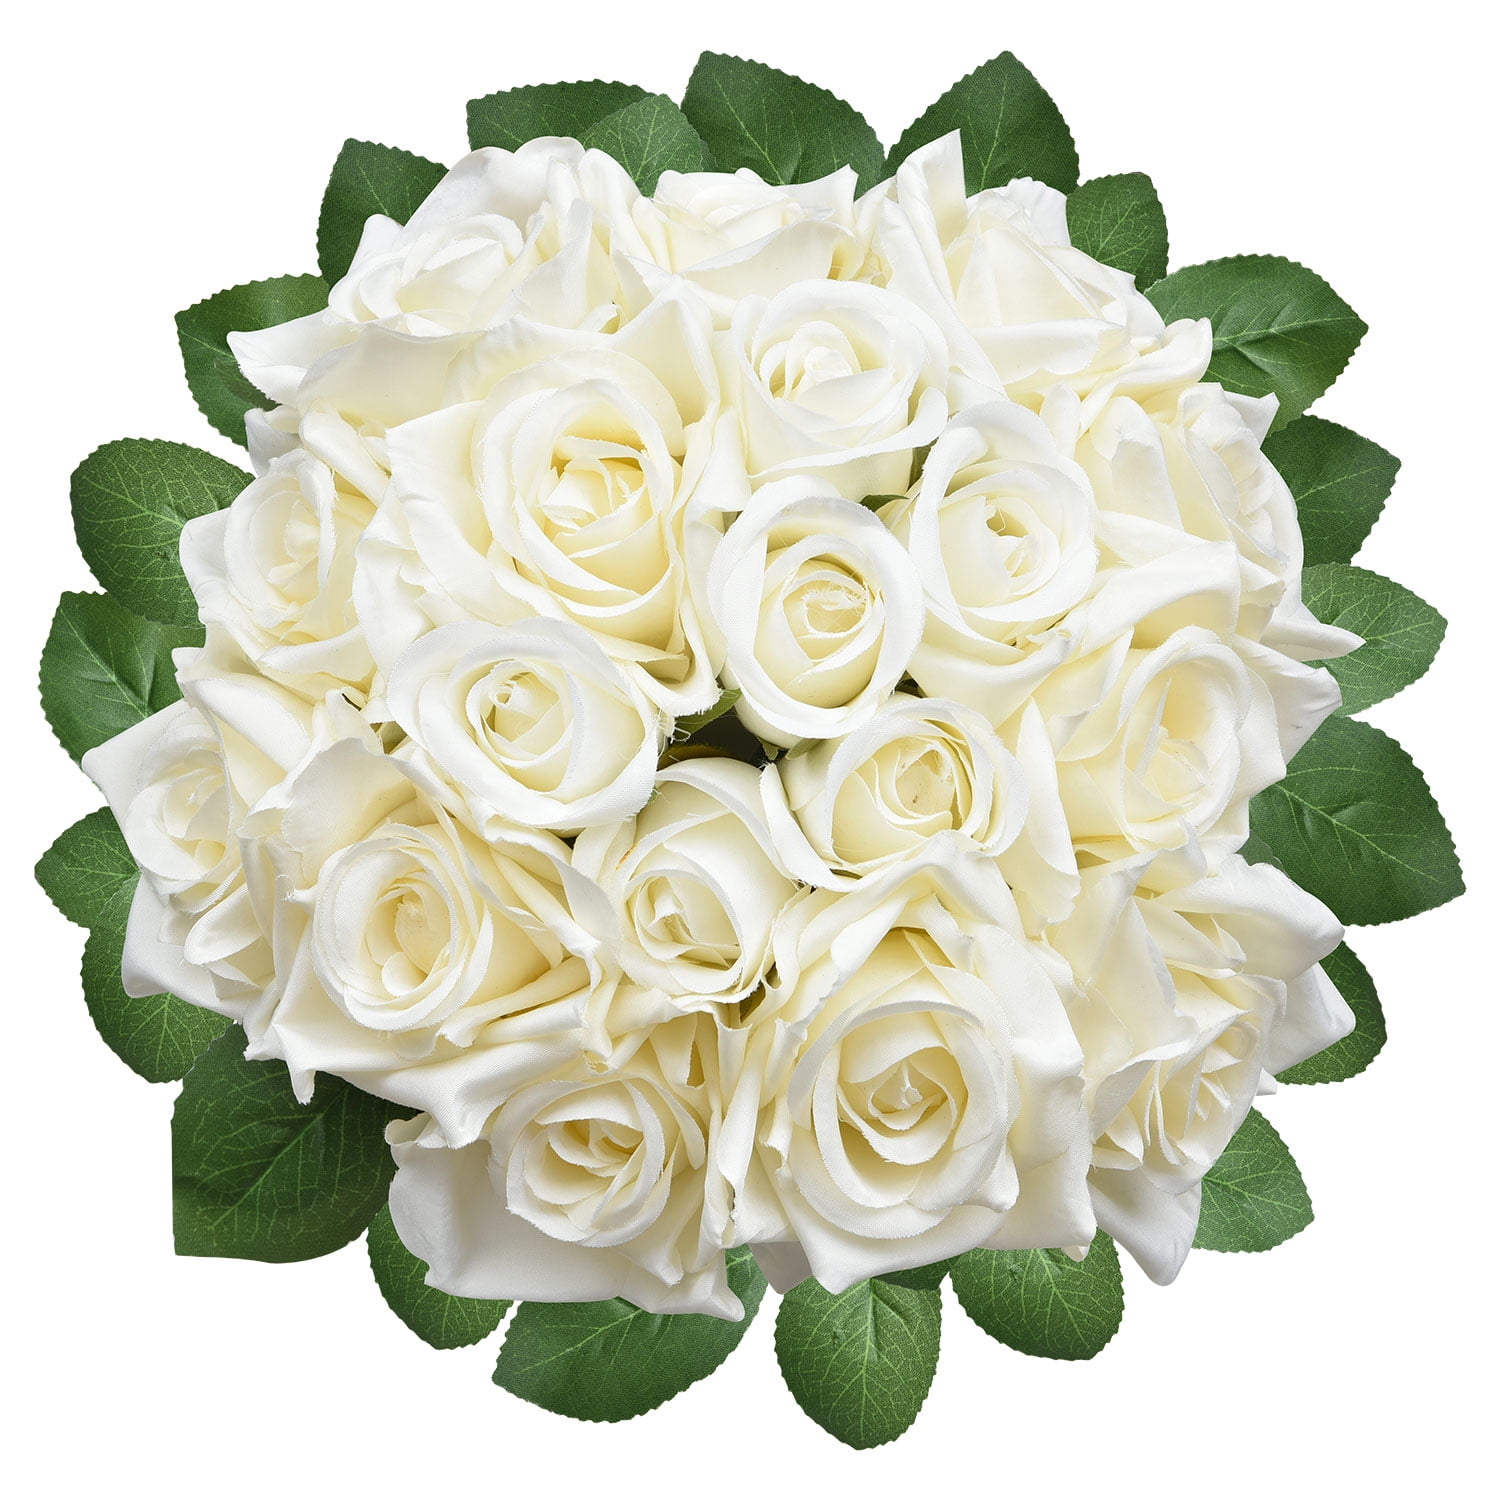 White Rose 14" Bush Home Decors Wedding Silk Flower Crafts Arts LOT 24 BUSHES 